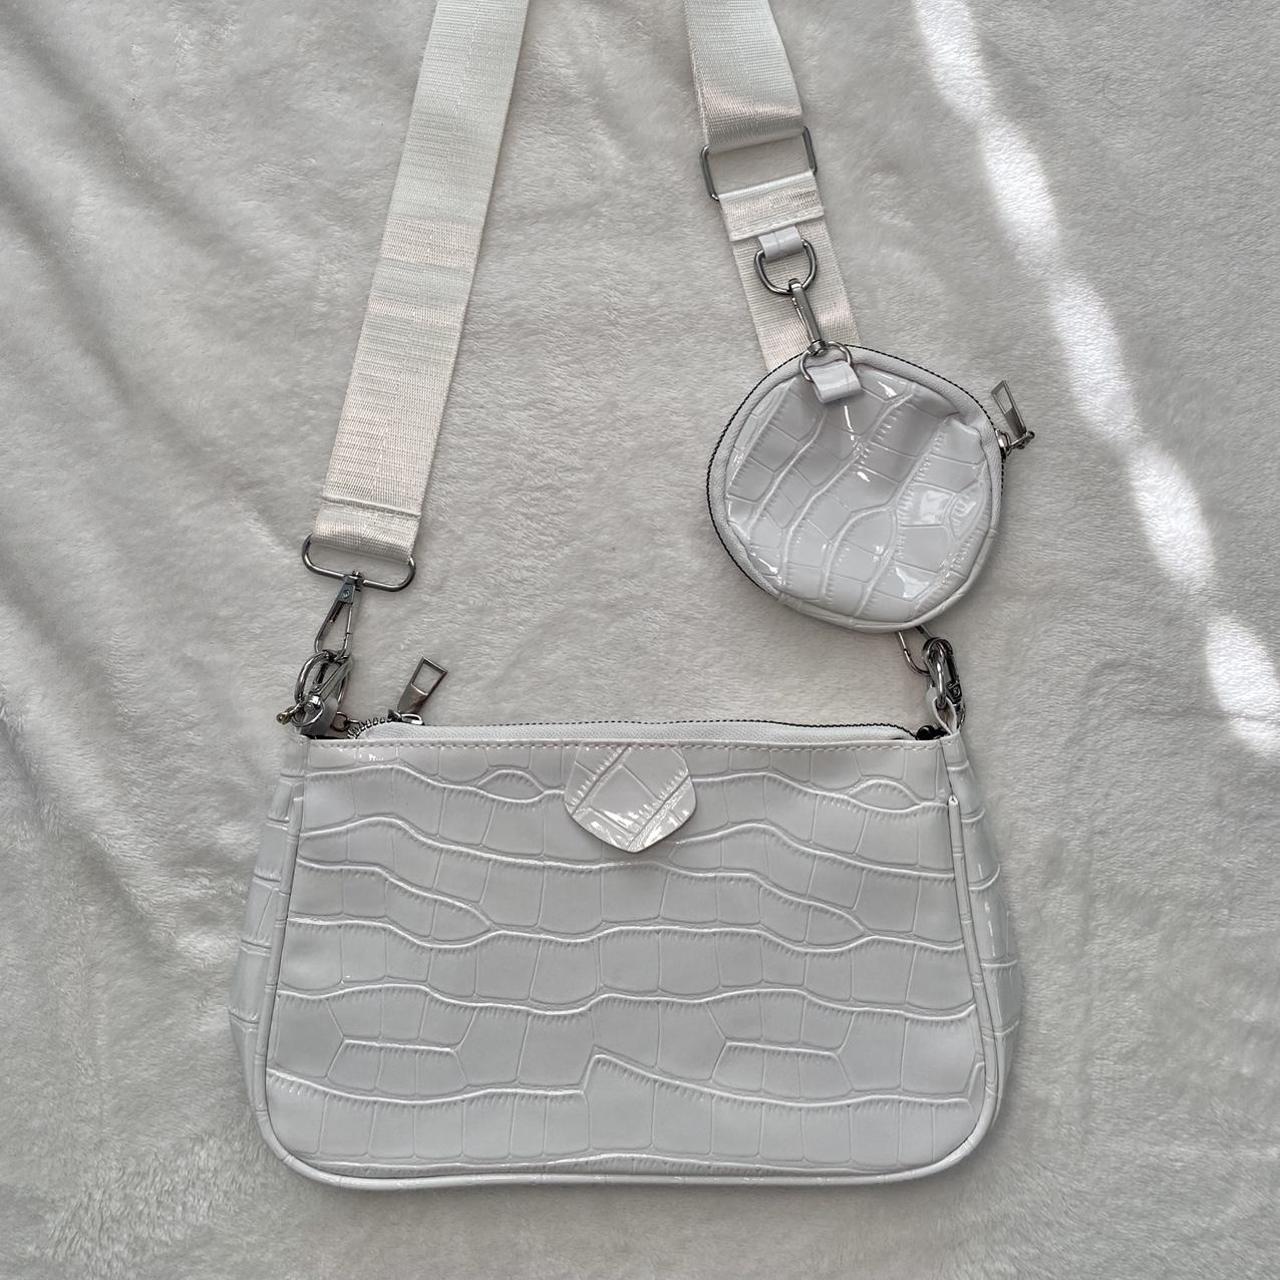 ZAFUL Women's White Bag (3)